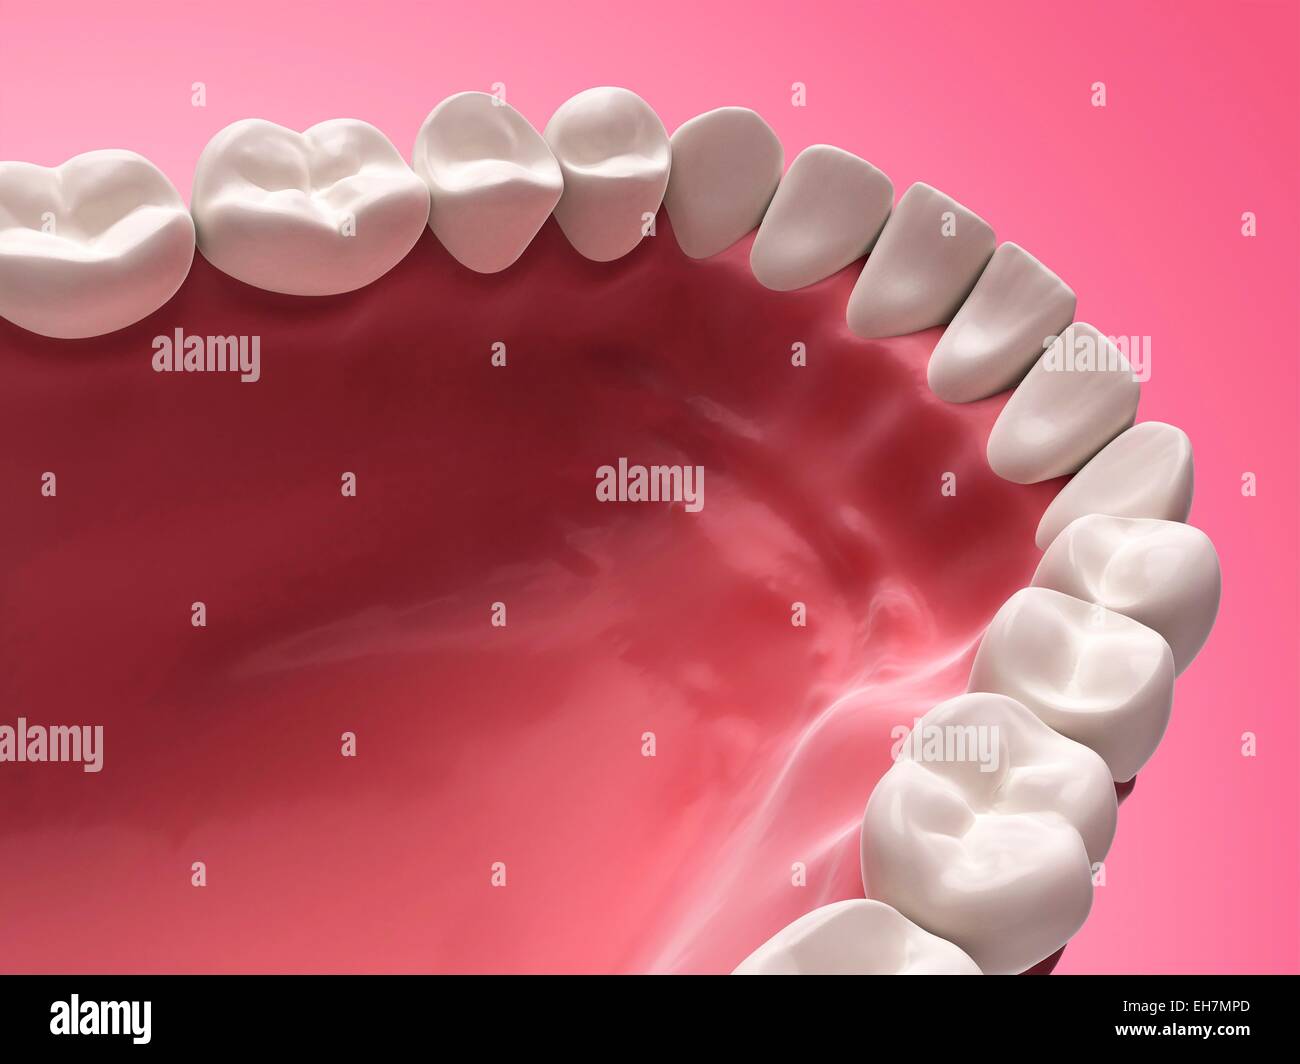 Lower human teeth, illustration Stock Photo